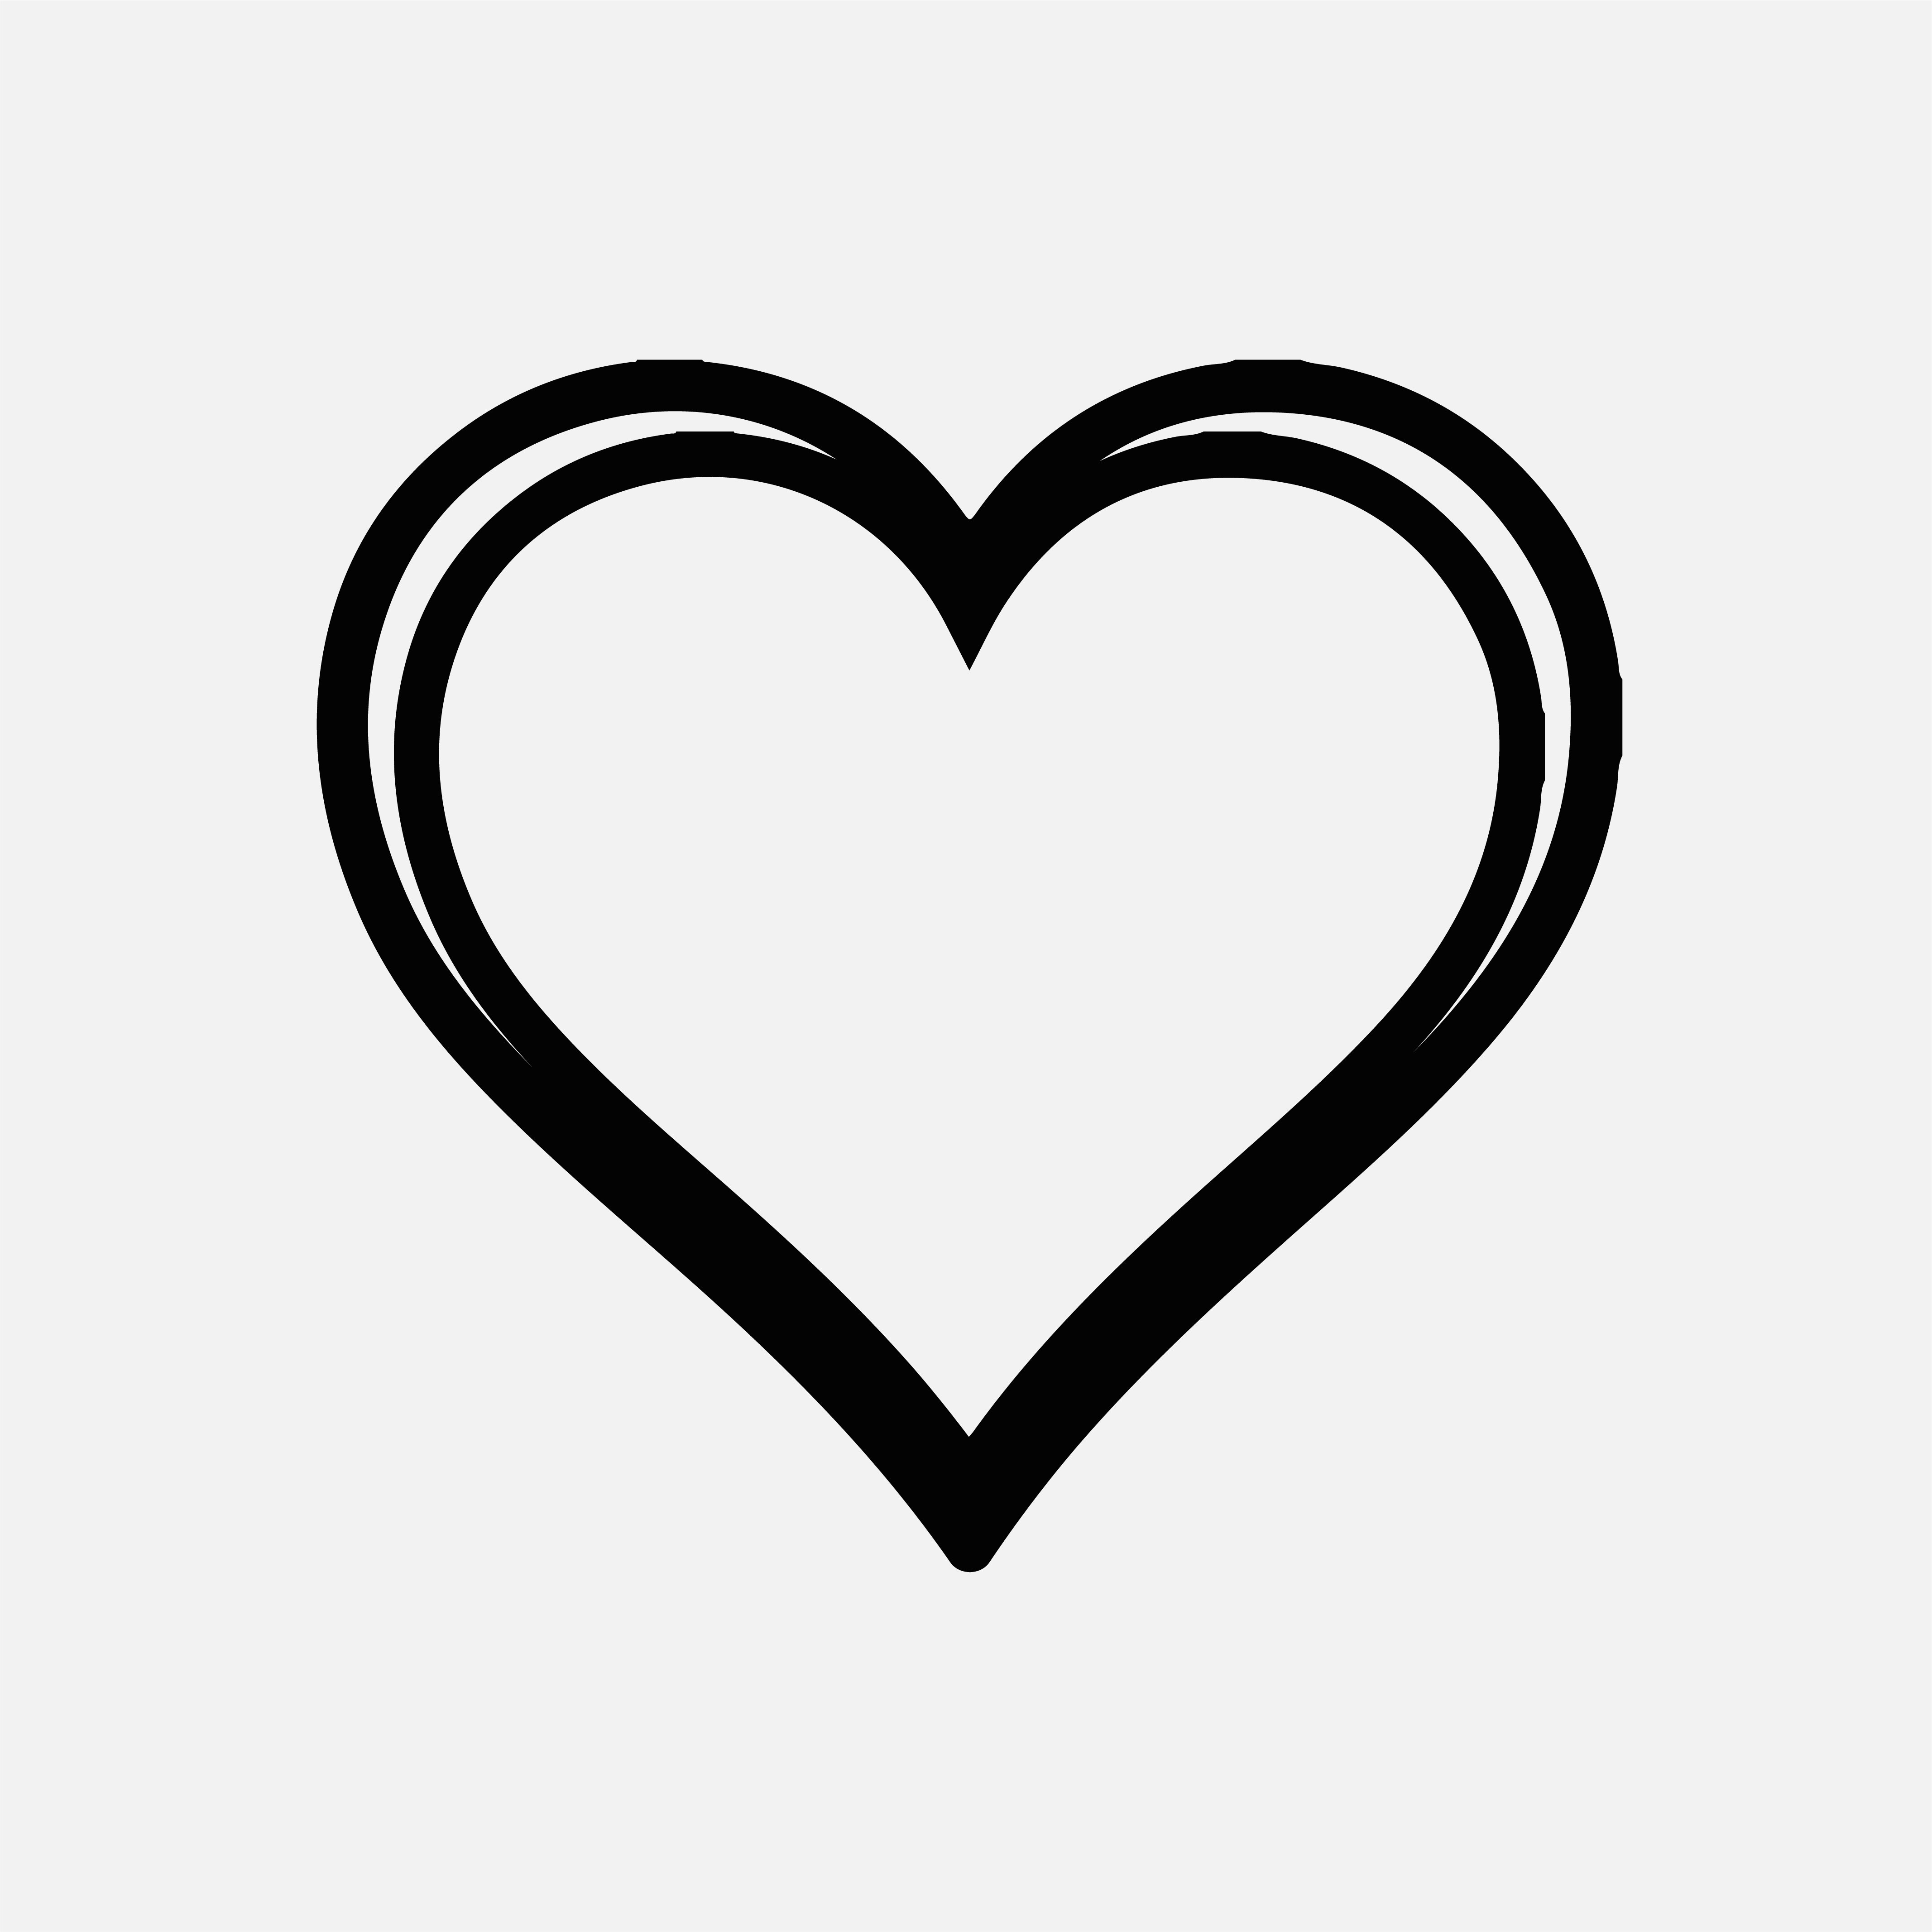 Hearts Heart Clip Art Black And White Free Clipart Im - vrogue.co